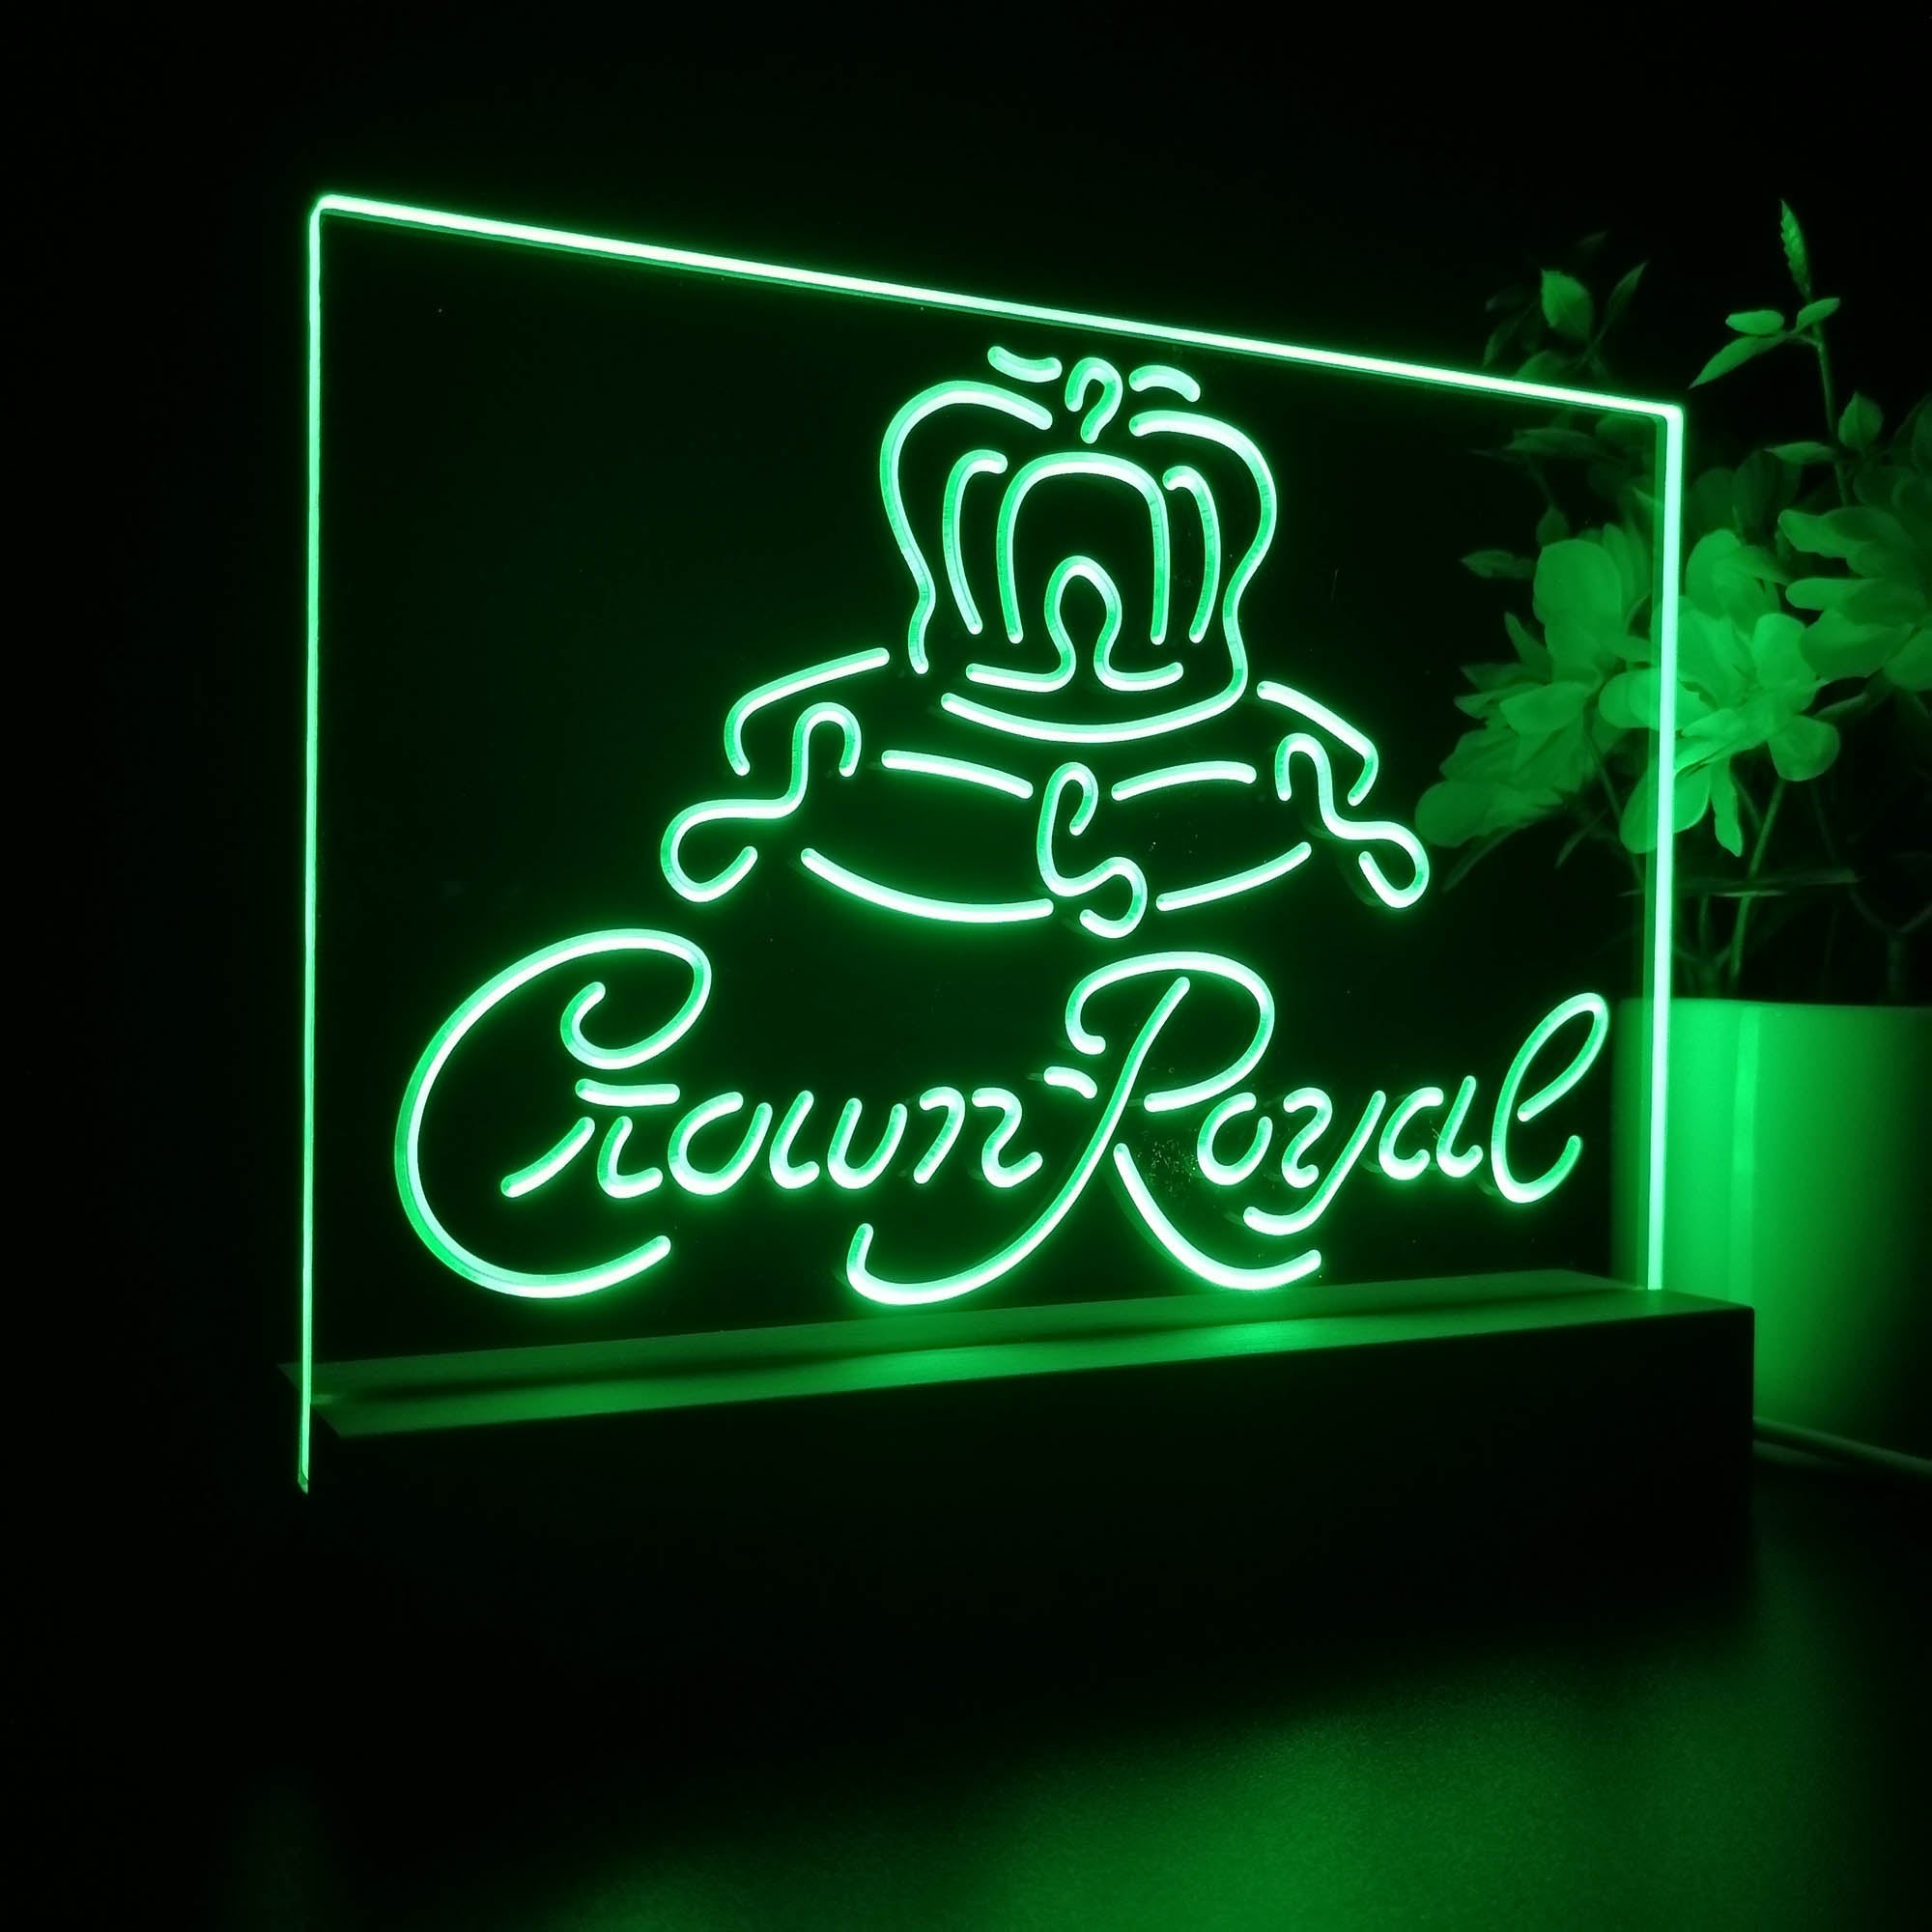 Crown Royal Beer Bar Neon Sign Pub Bar Lamp